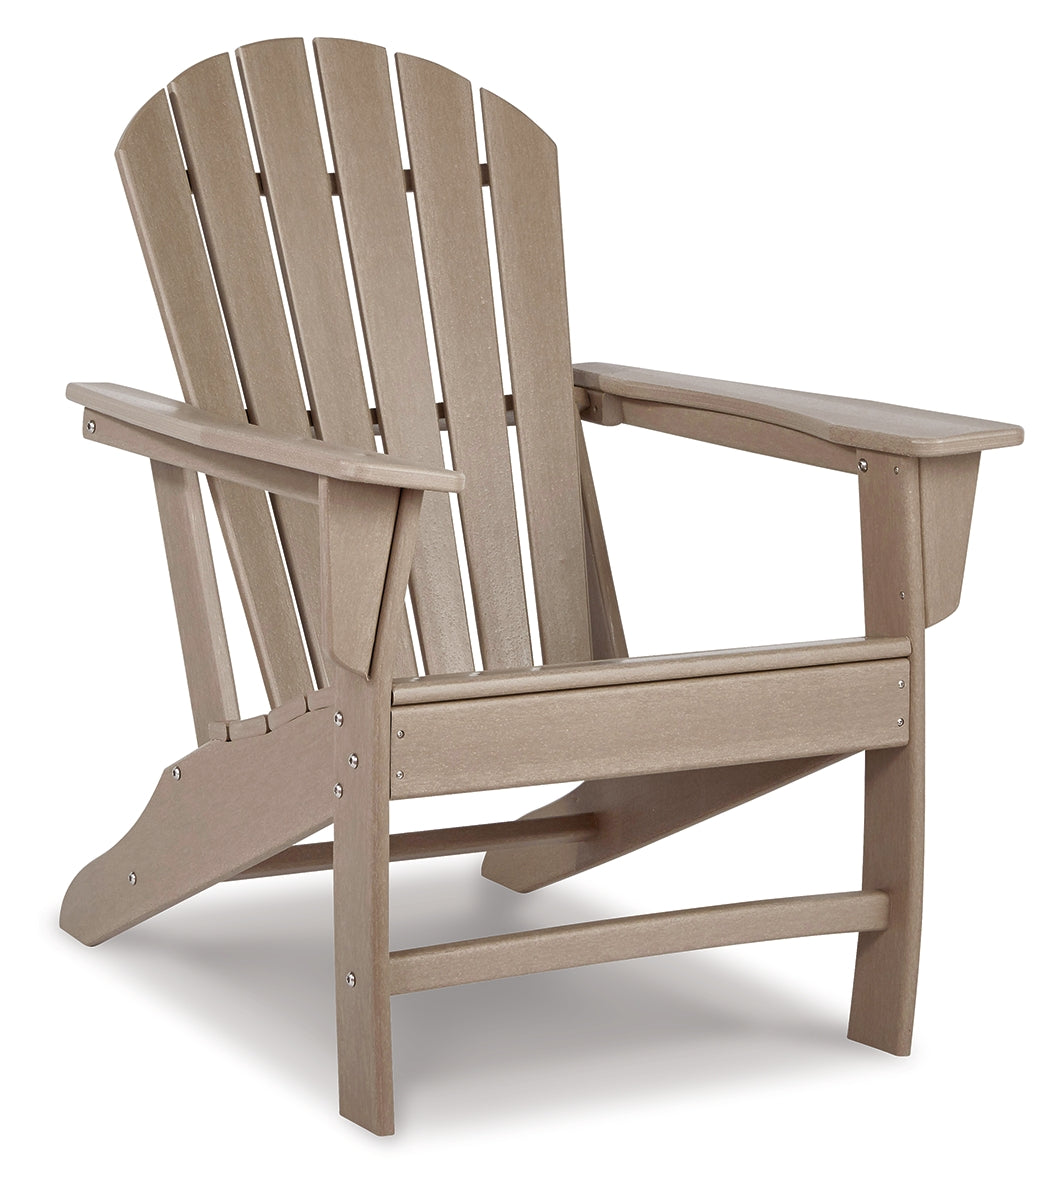 Sundown Treasure Outdoor Adirondack Chair and Ottoman with Side Table